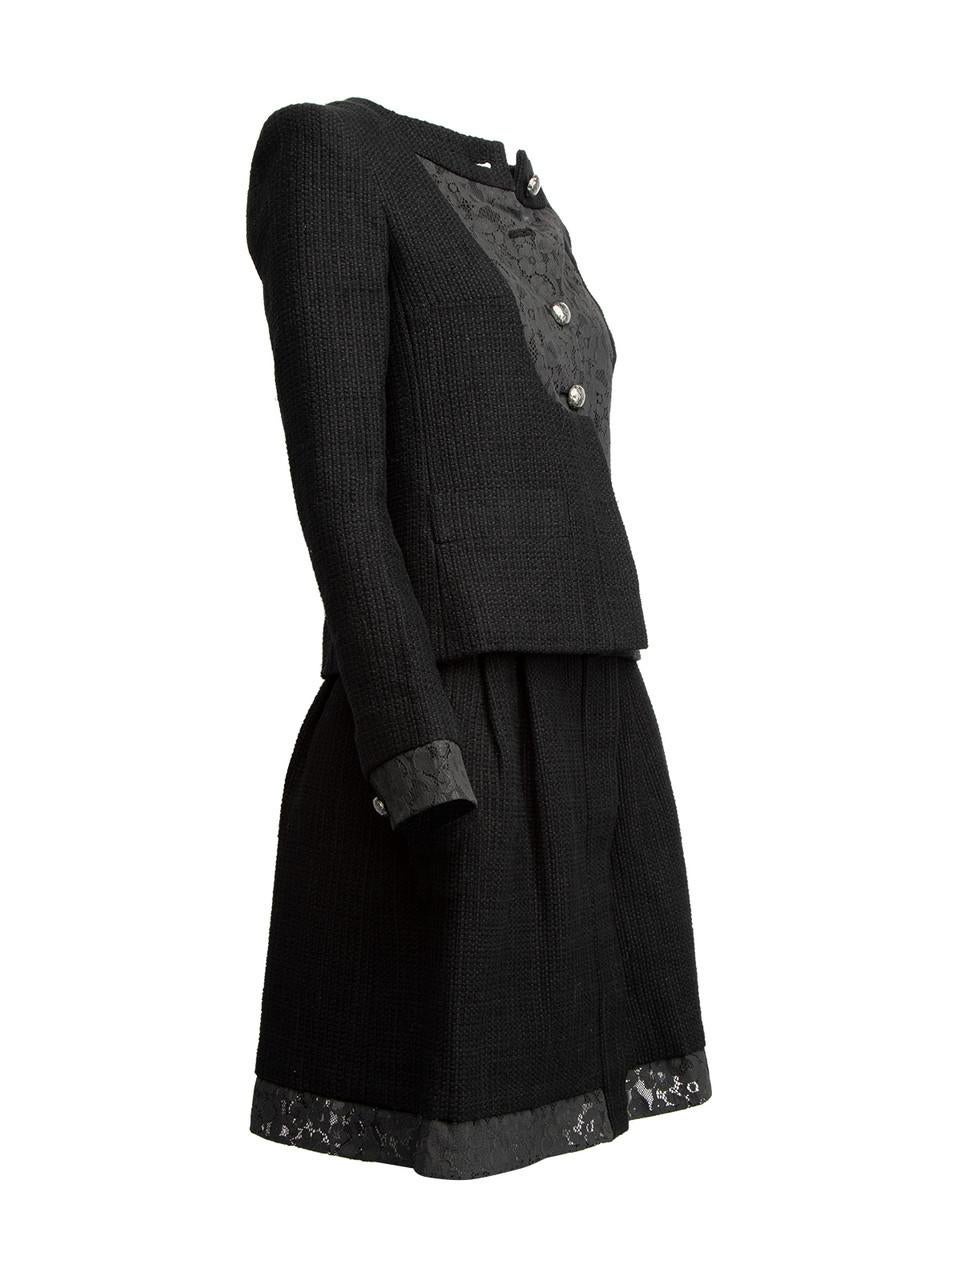 Chanel Women's Vintage Black Chanel Two Piece Suit For Sale 1